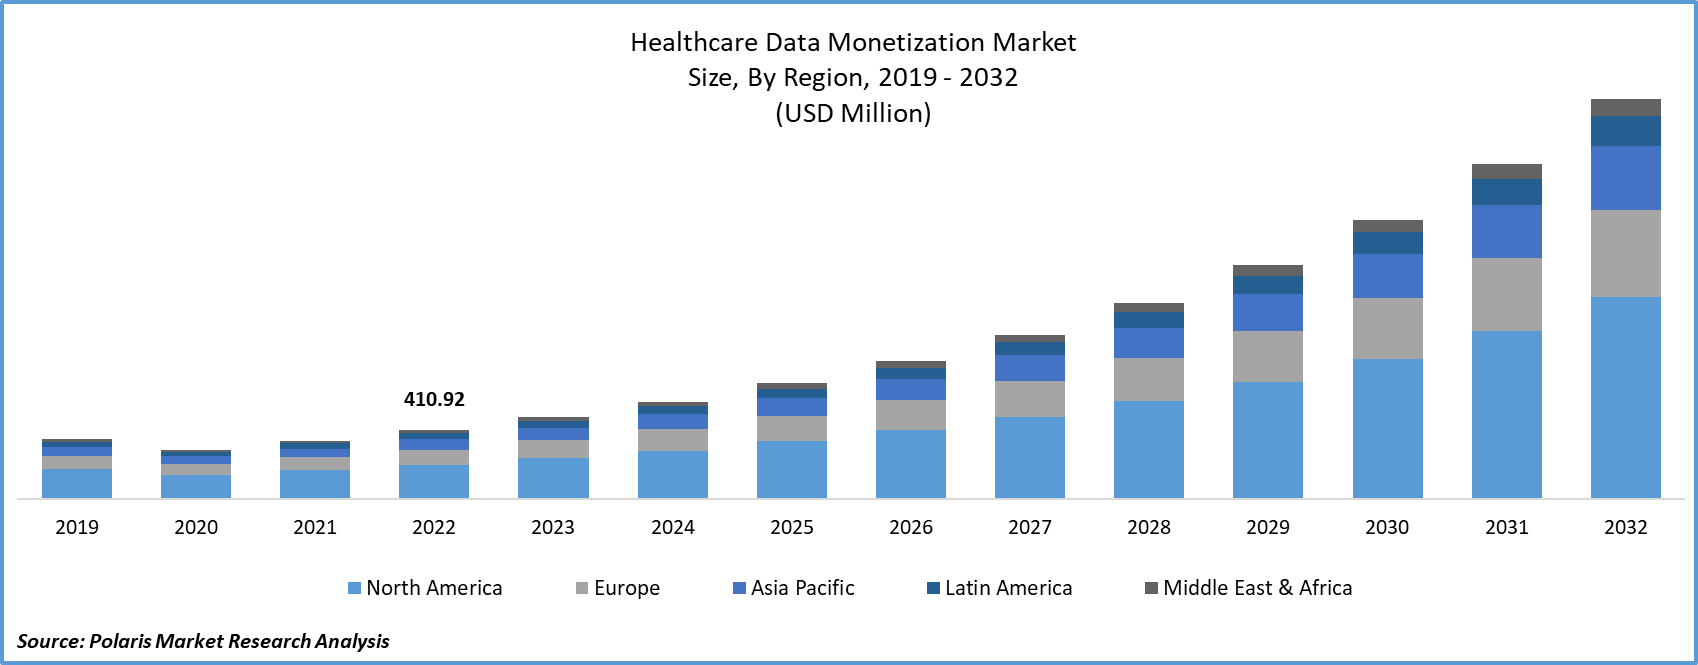 Healthcare Data Monetization Market Size